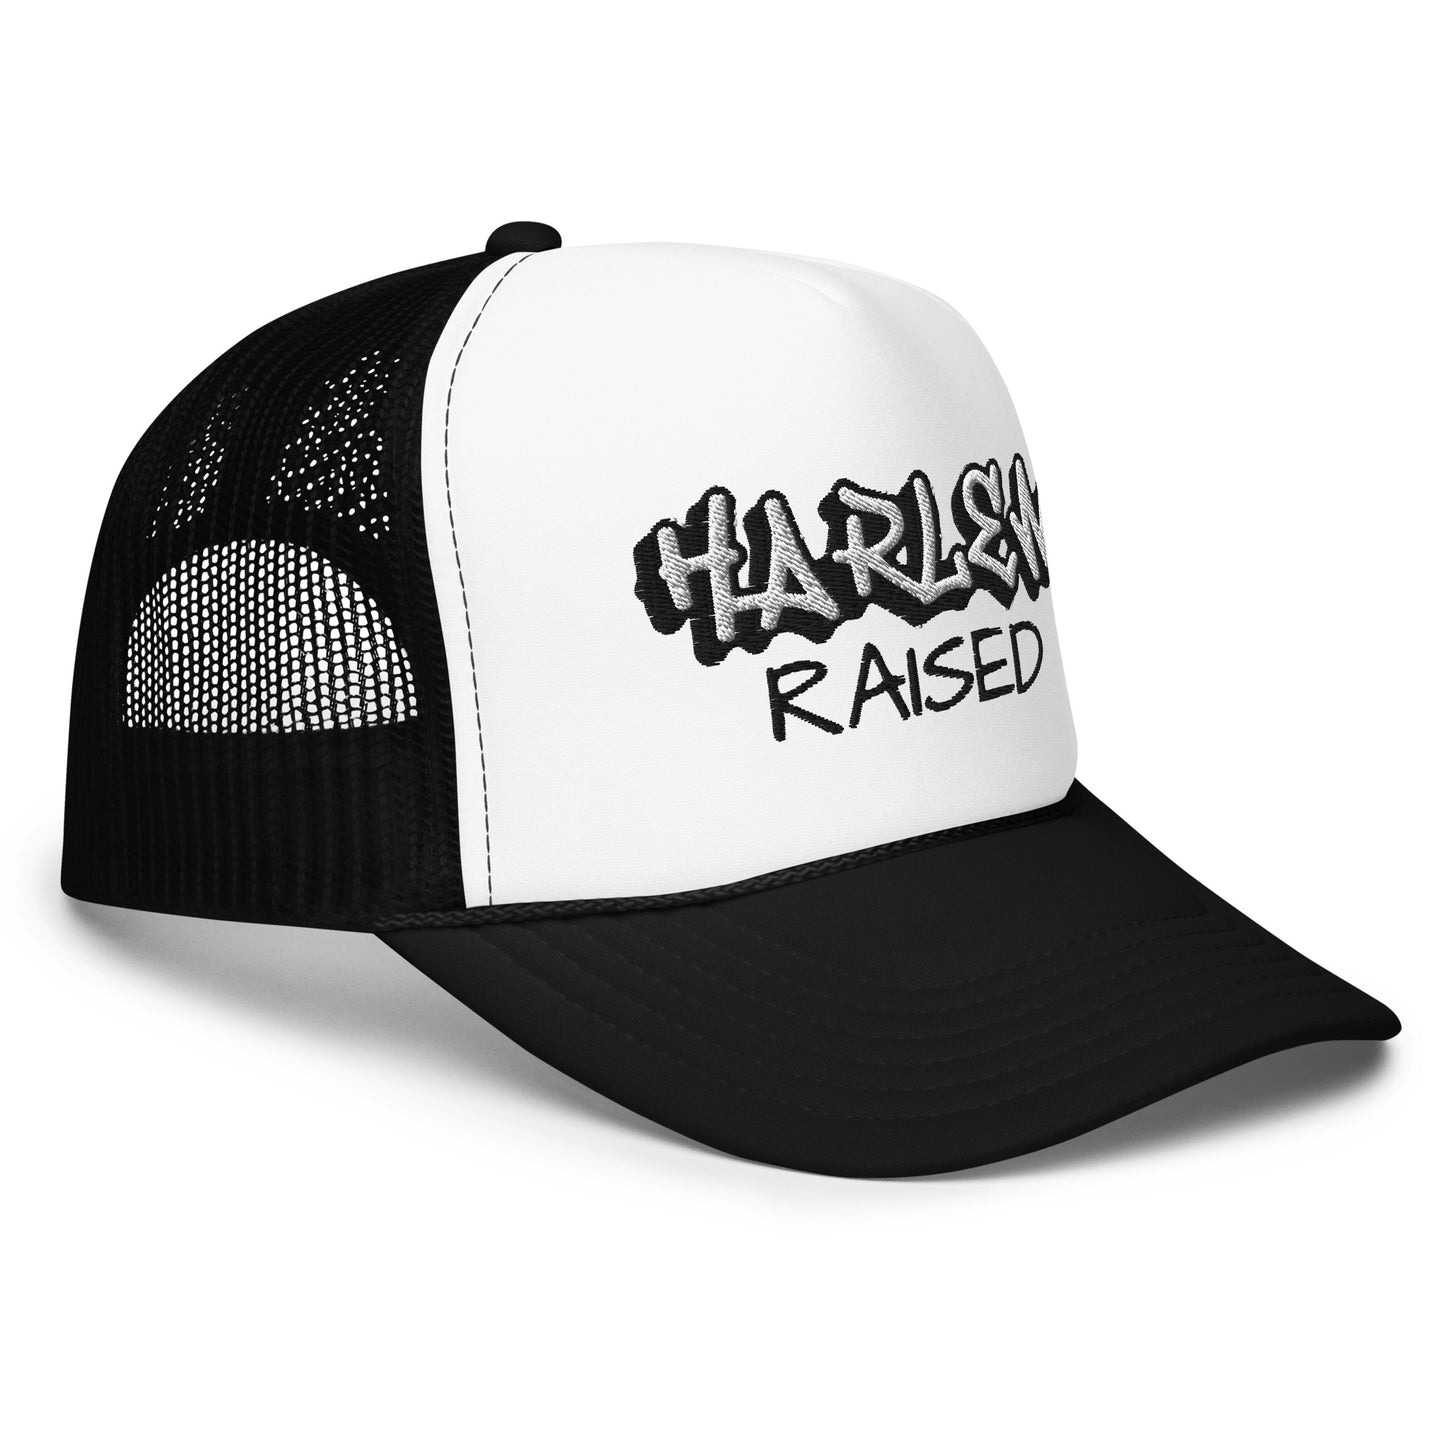 JAZRAE Harlem Raised Stitched  Foam trucker hat